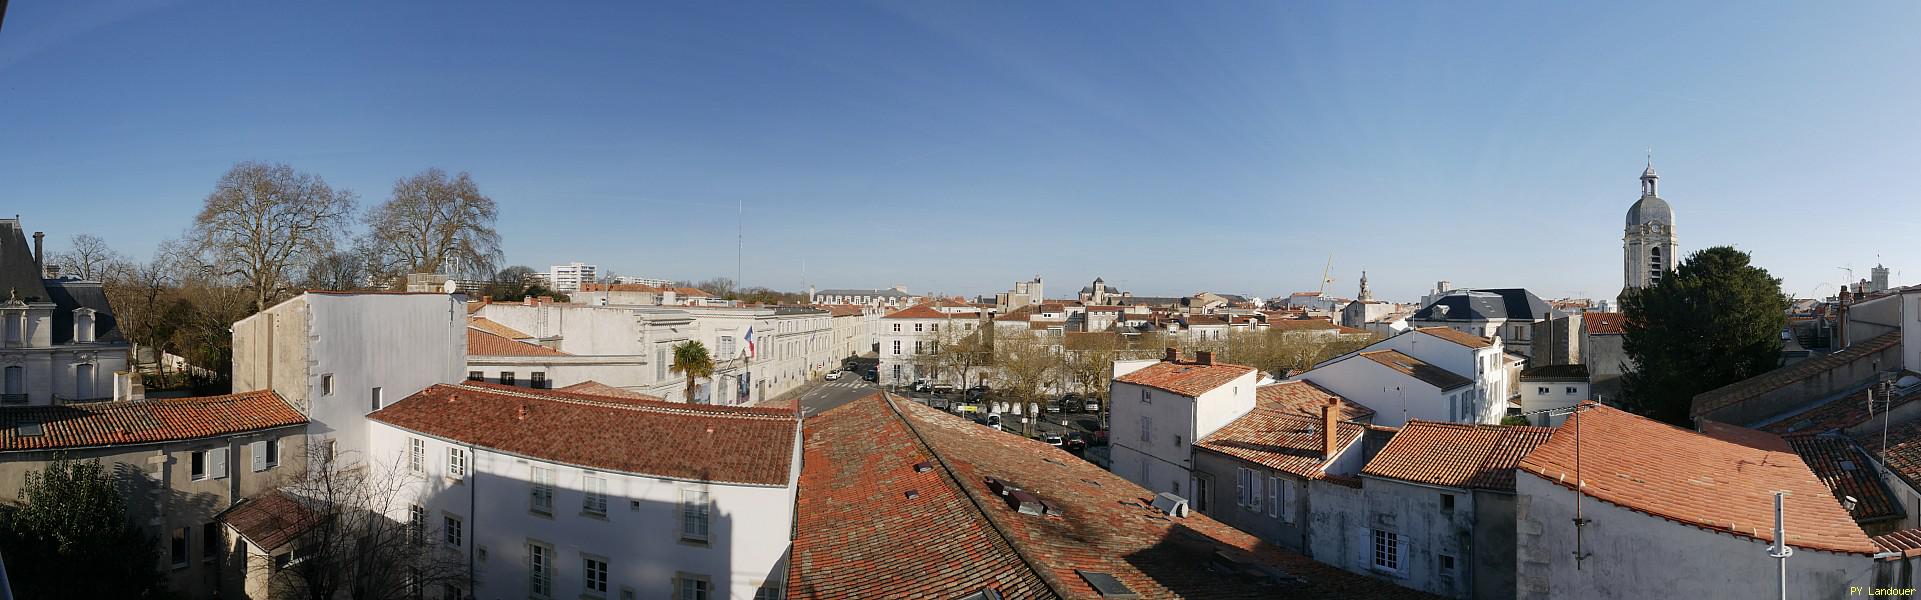 La Rochelle vu d'en haut, 52 rue Saint-Jean-du-Pérot